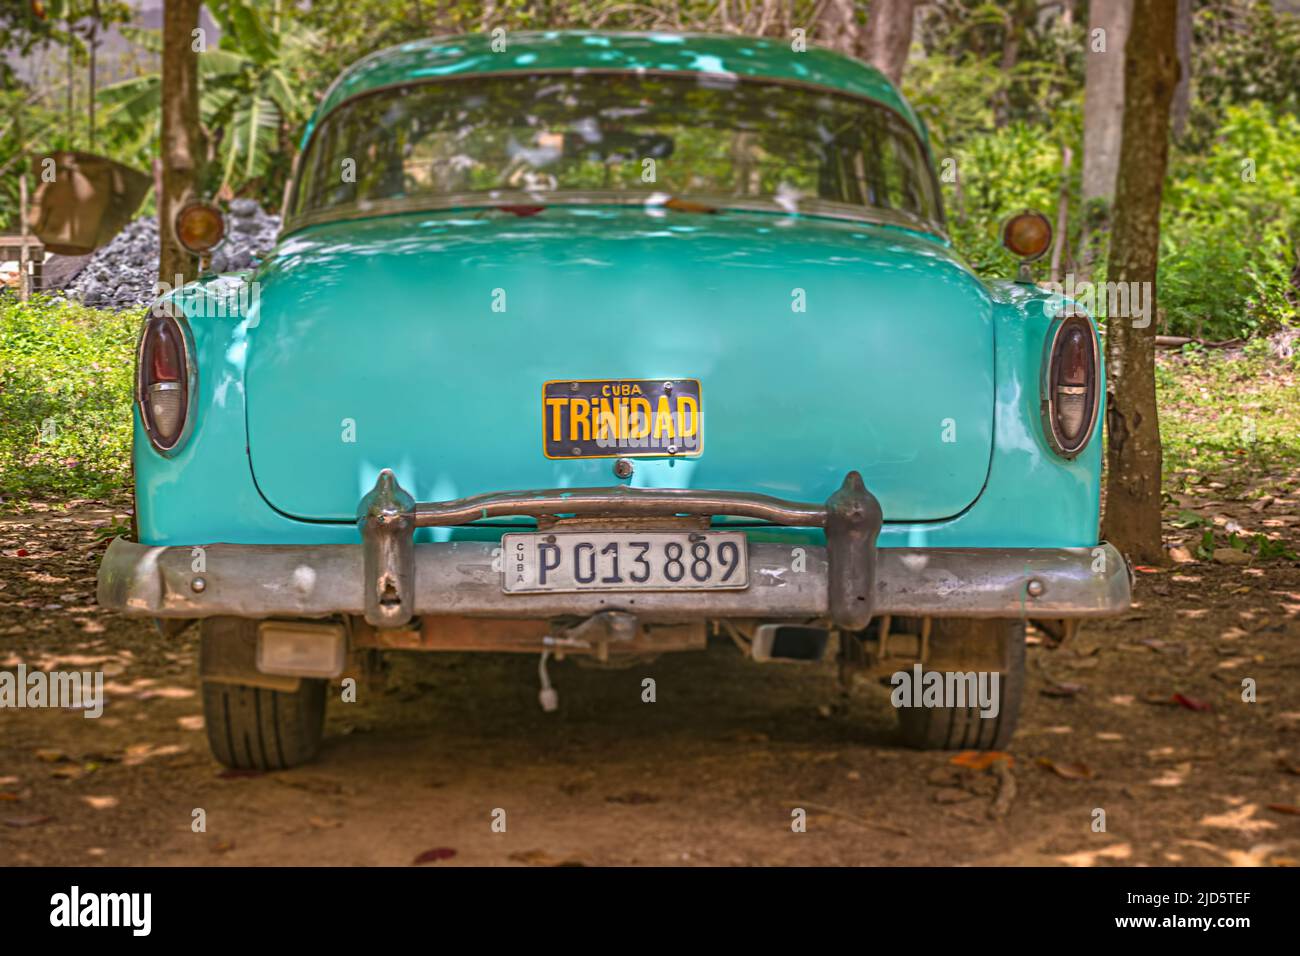 Parked, green-blue Cuban vintage car with Trinidad plate on trunk near Trinidad, Cuba Stock Photo